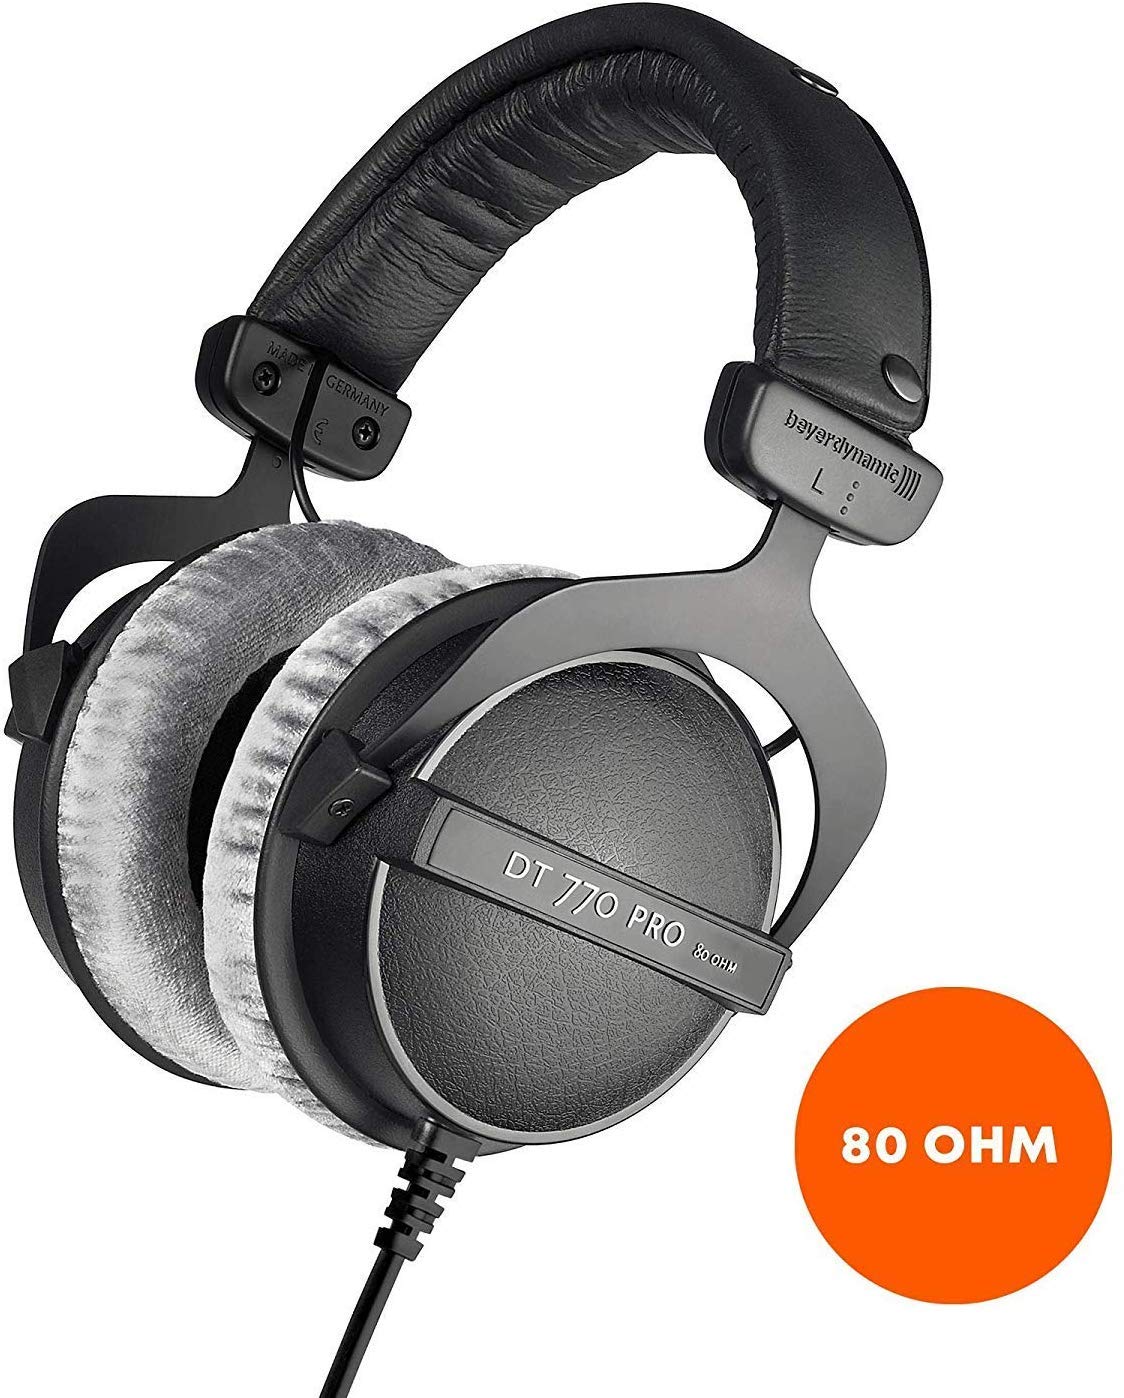 Beyerdynamic DT 770 PRO Over-Ear Studio Headphones Review